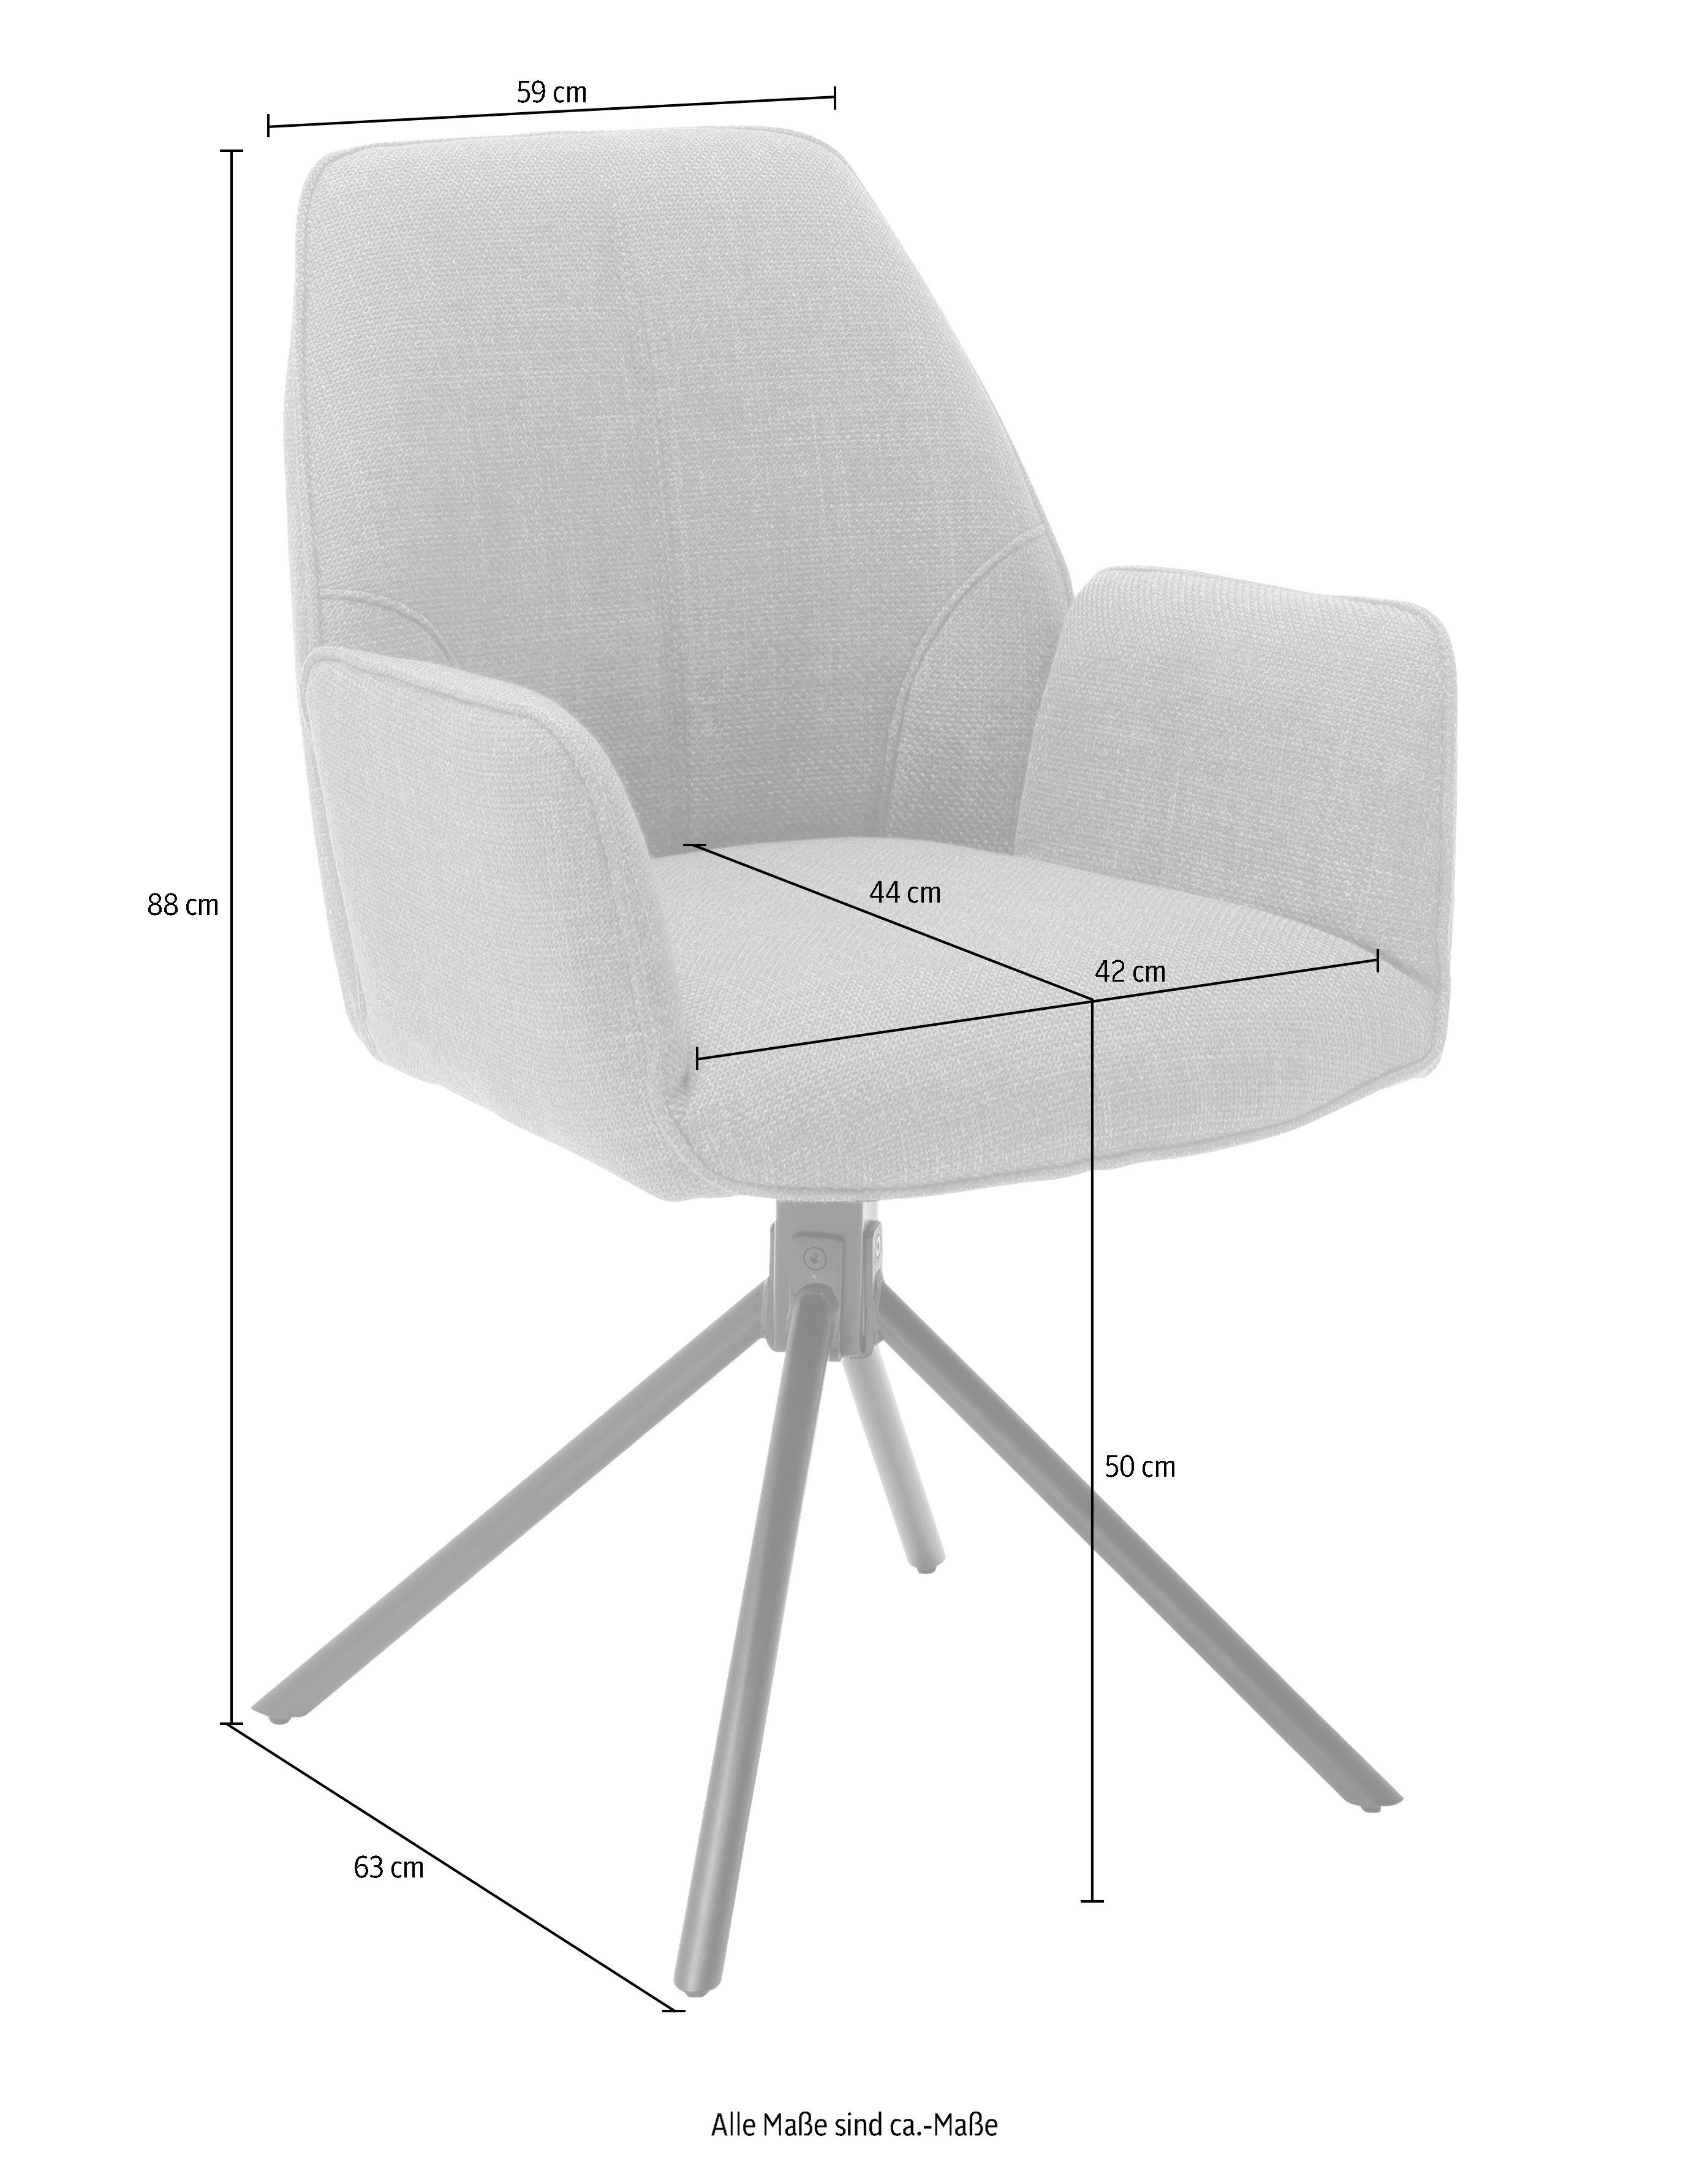 mit 4-Fußstuhl furniture 120 | (Set, St), MCA 2 180°drehabr belastbar Pemba Stuhl bis Nivellierung, Cappuccino 2er-Set, Cappuccino kg